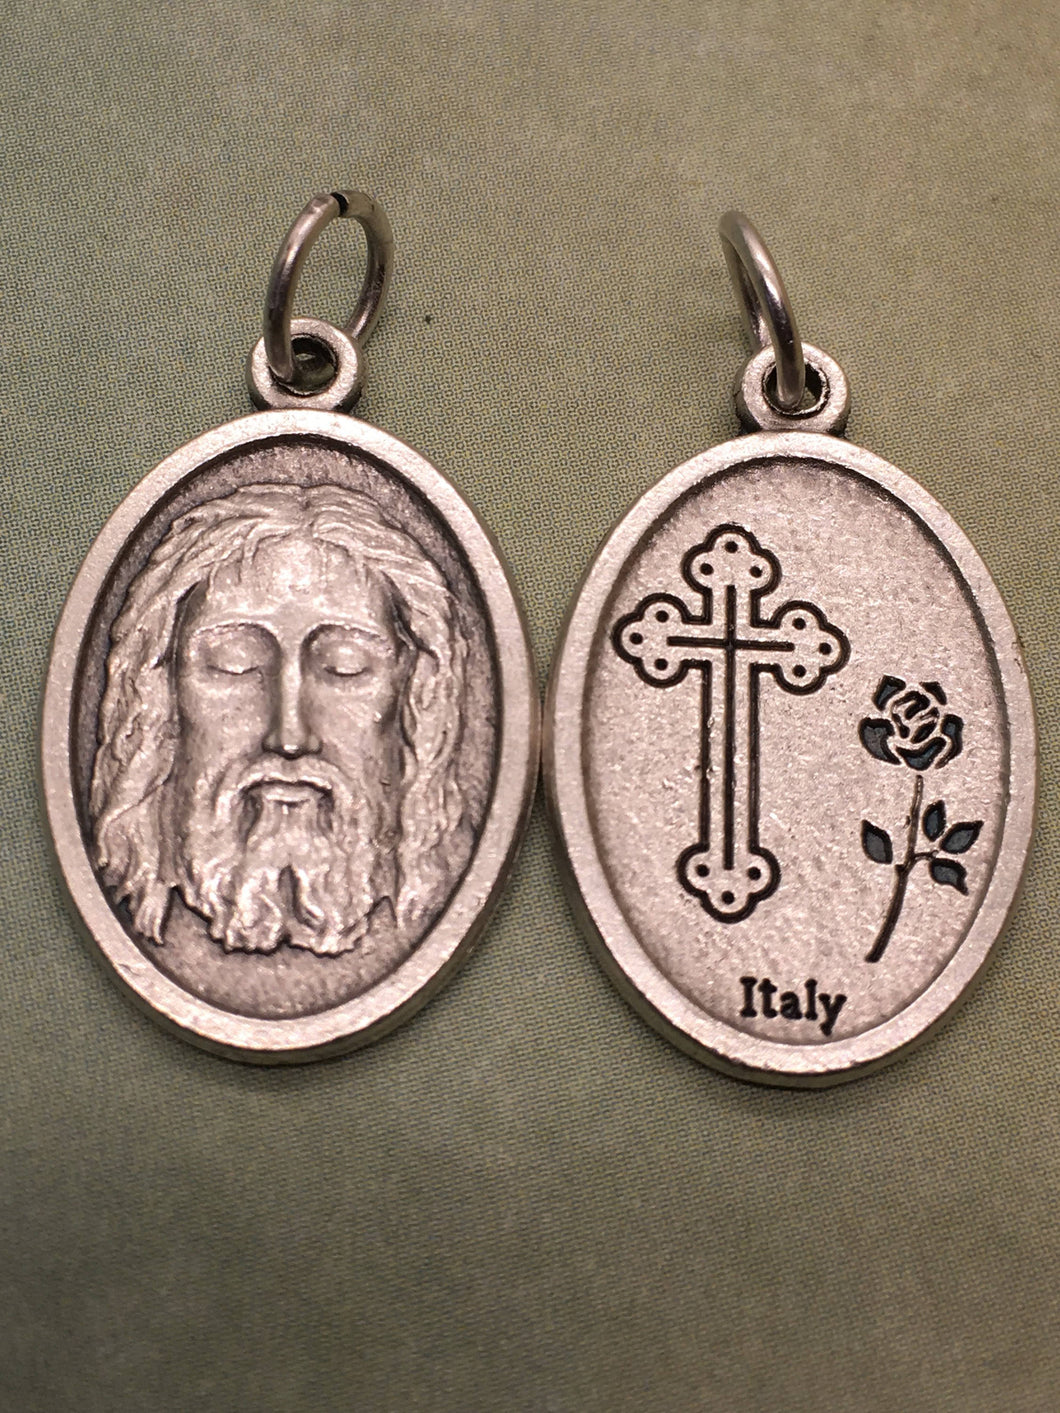 Holy Face of Christ holy medal